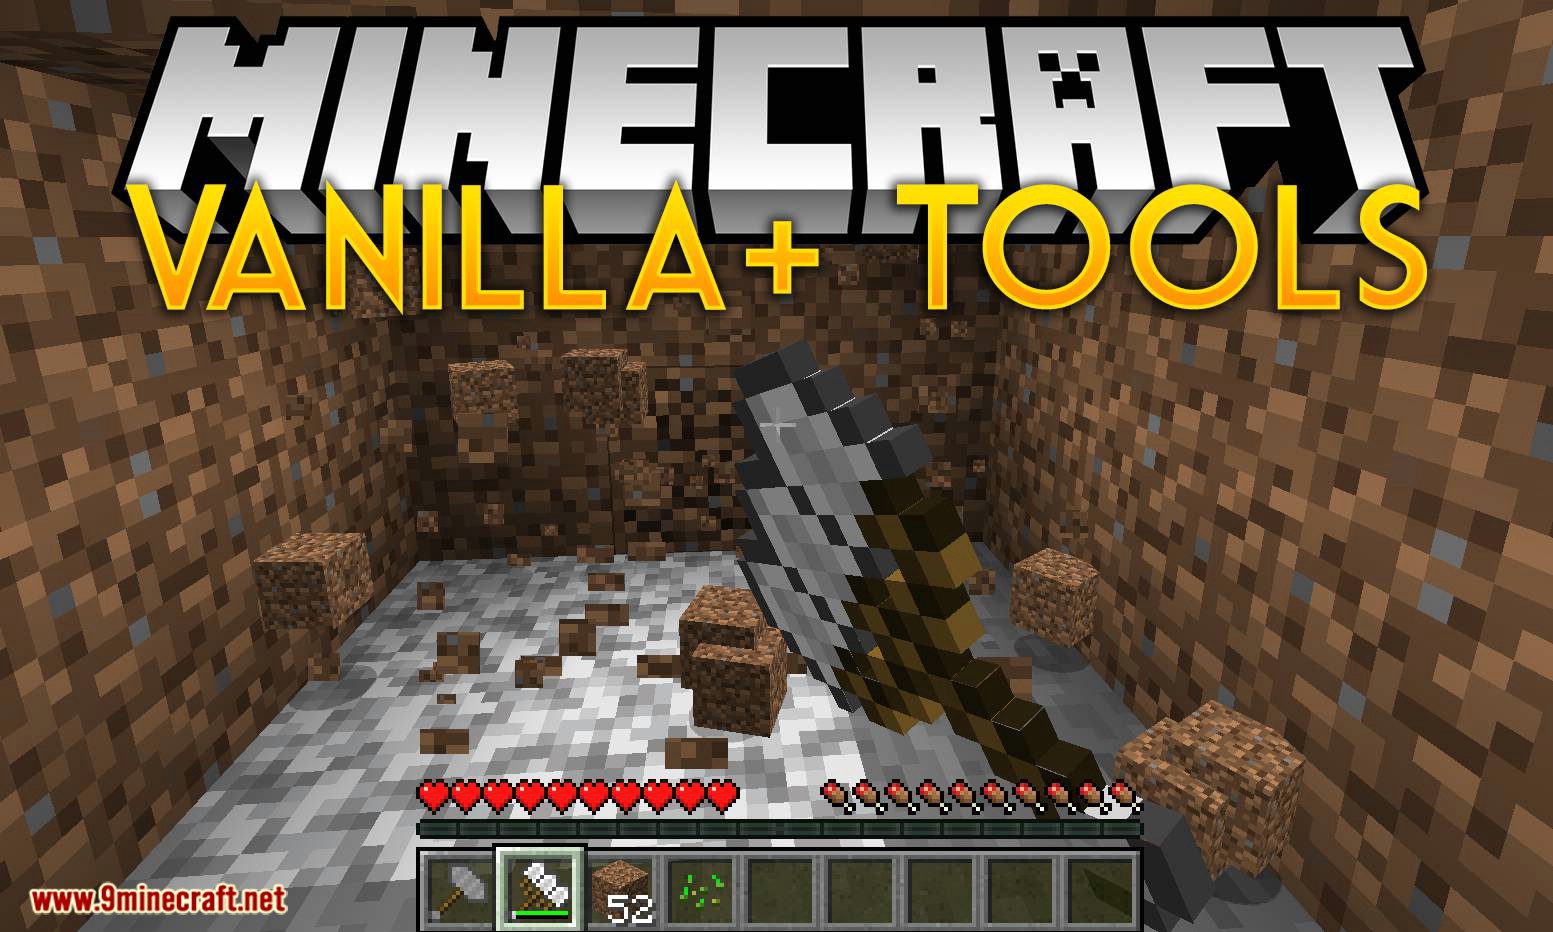 Vanilla Plus Tools Mod for minecraft logo